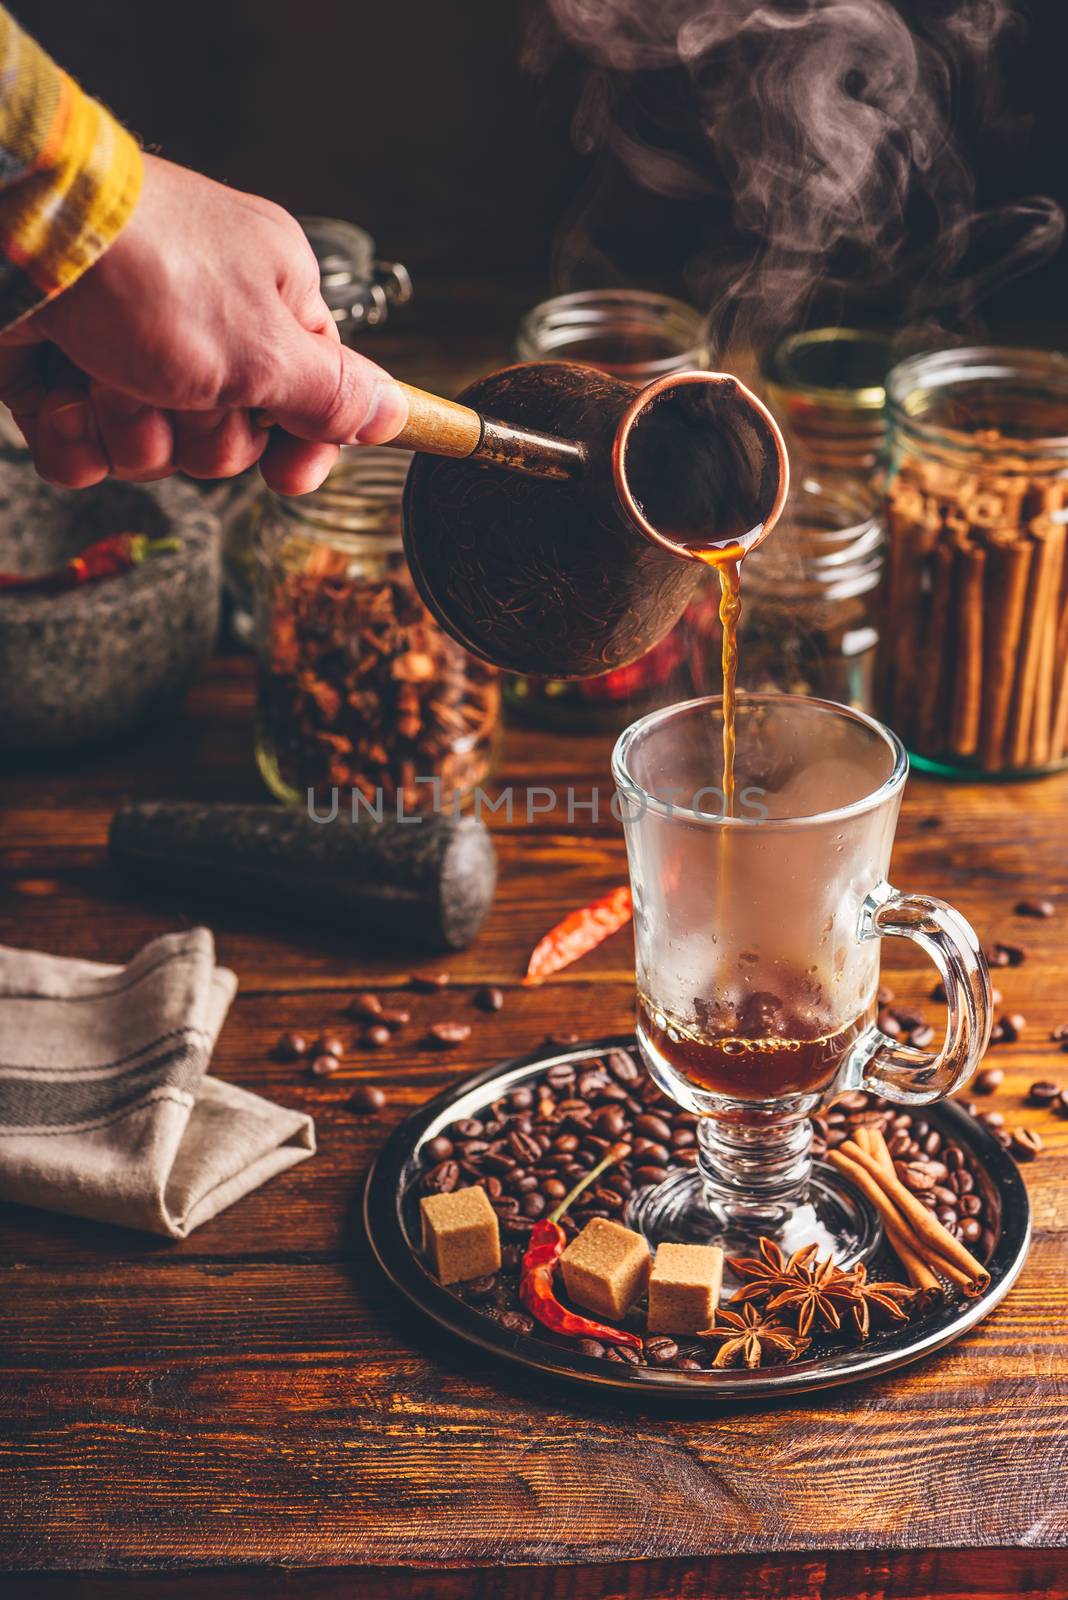 Man Pour Coffee in Mug. by Seva_blsv